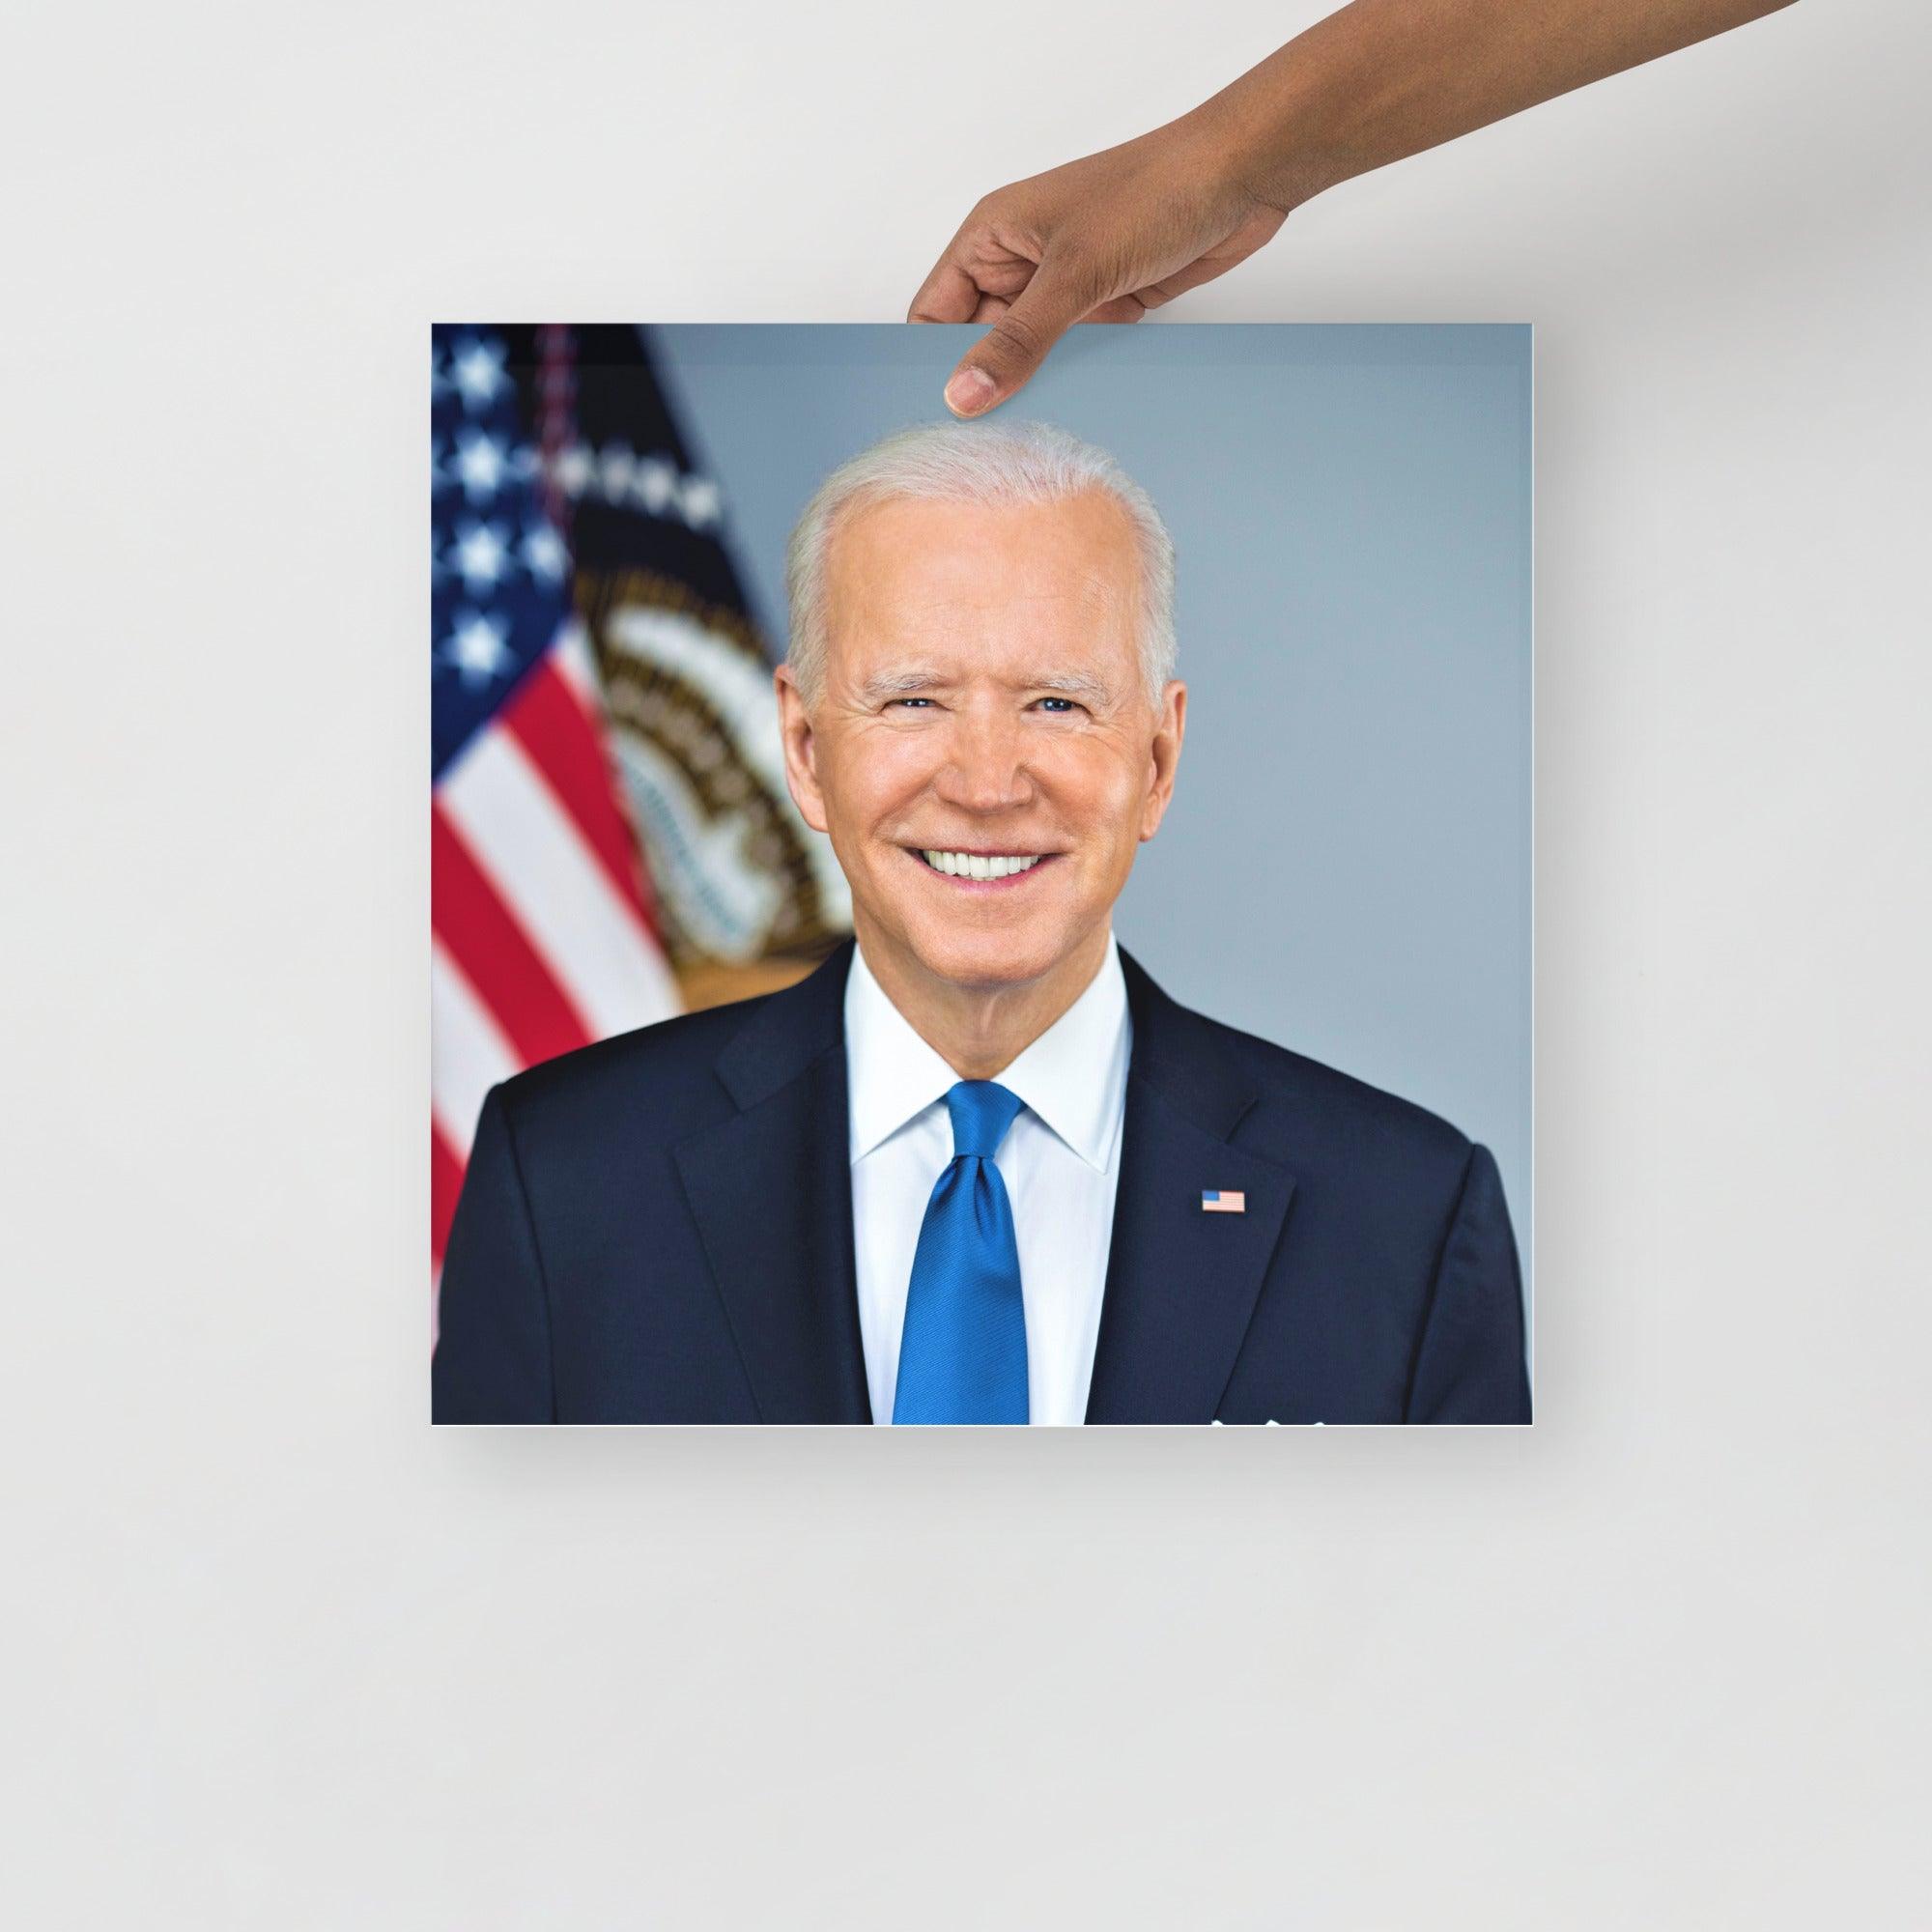 A Joe Biden Official Portrait poster on a plain backdrop in size 16x16”.